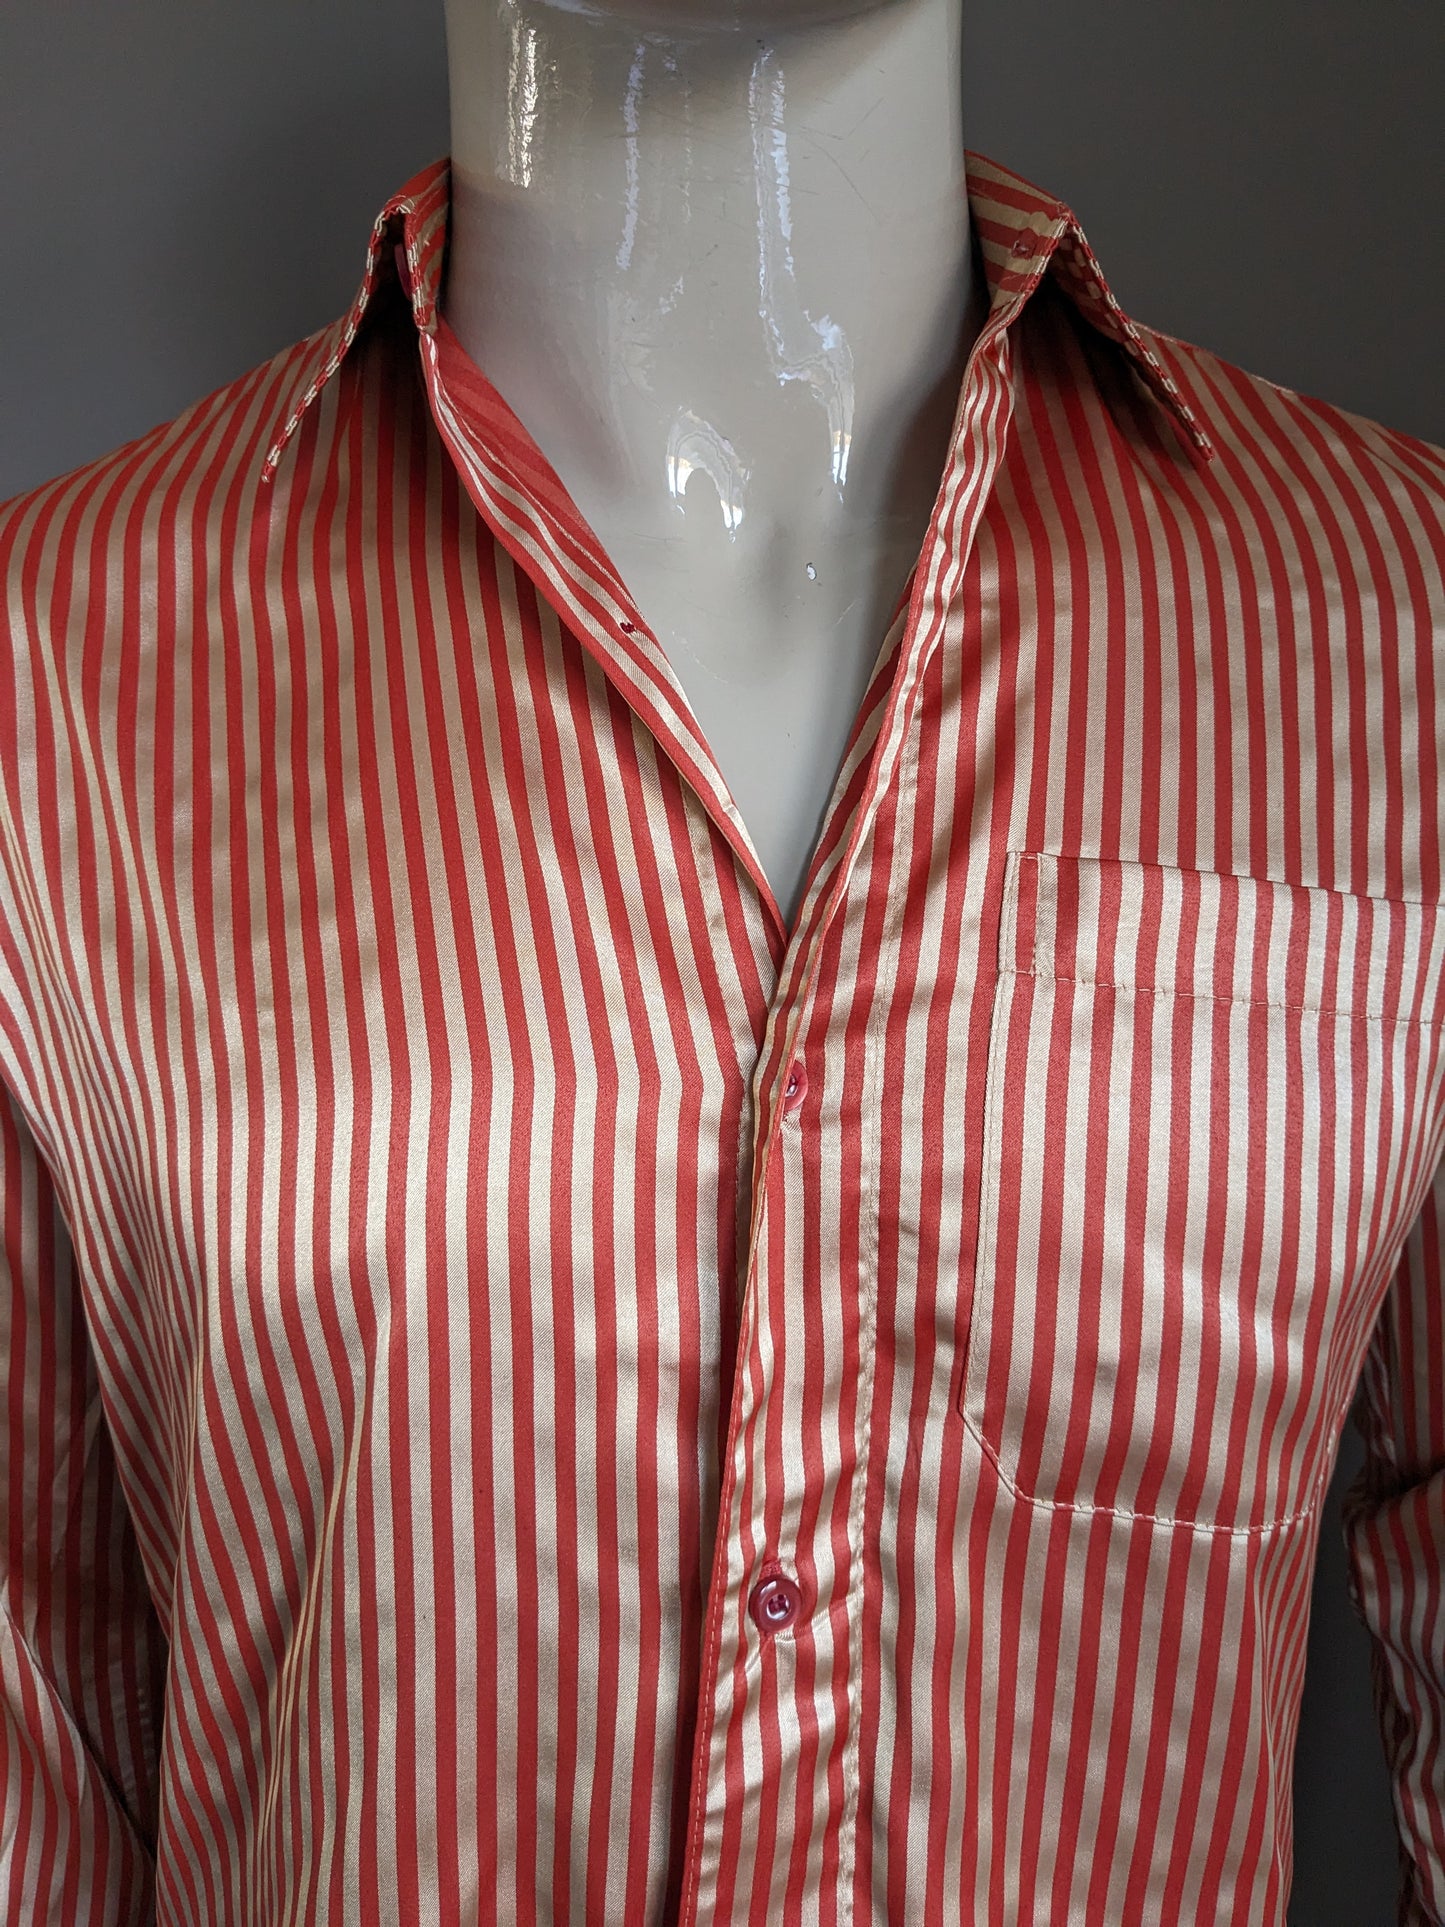 Vintage Bangalore overhemd. Rood Goudkleurig gestreept. Maat M.